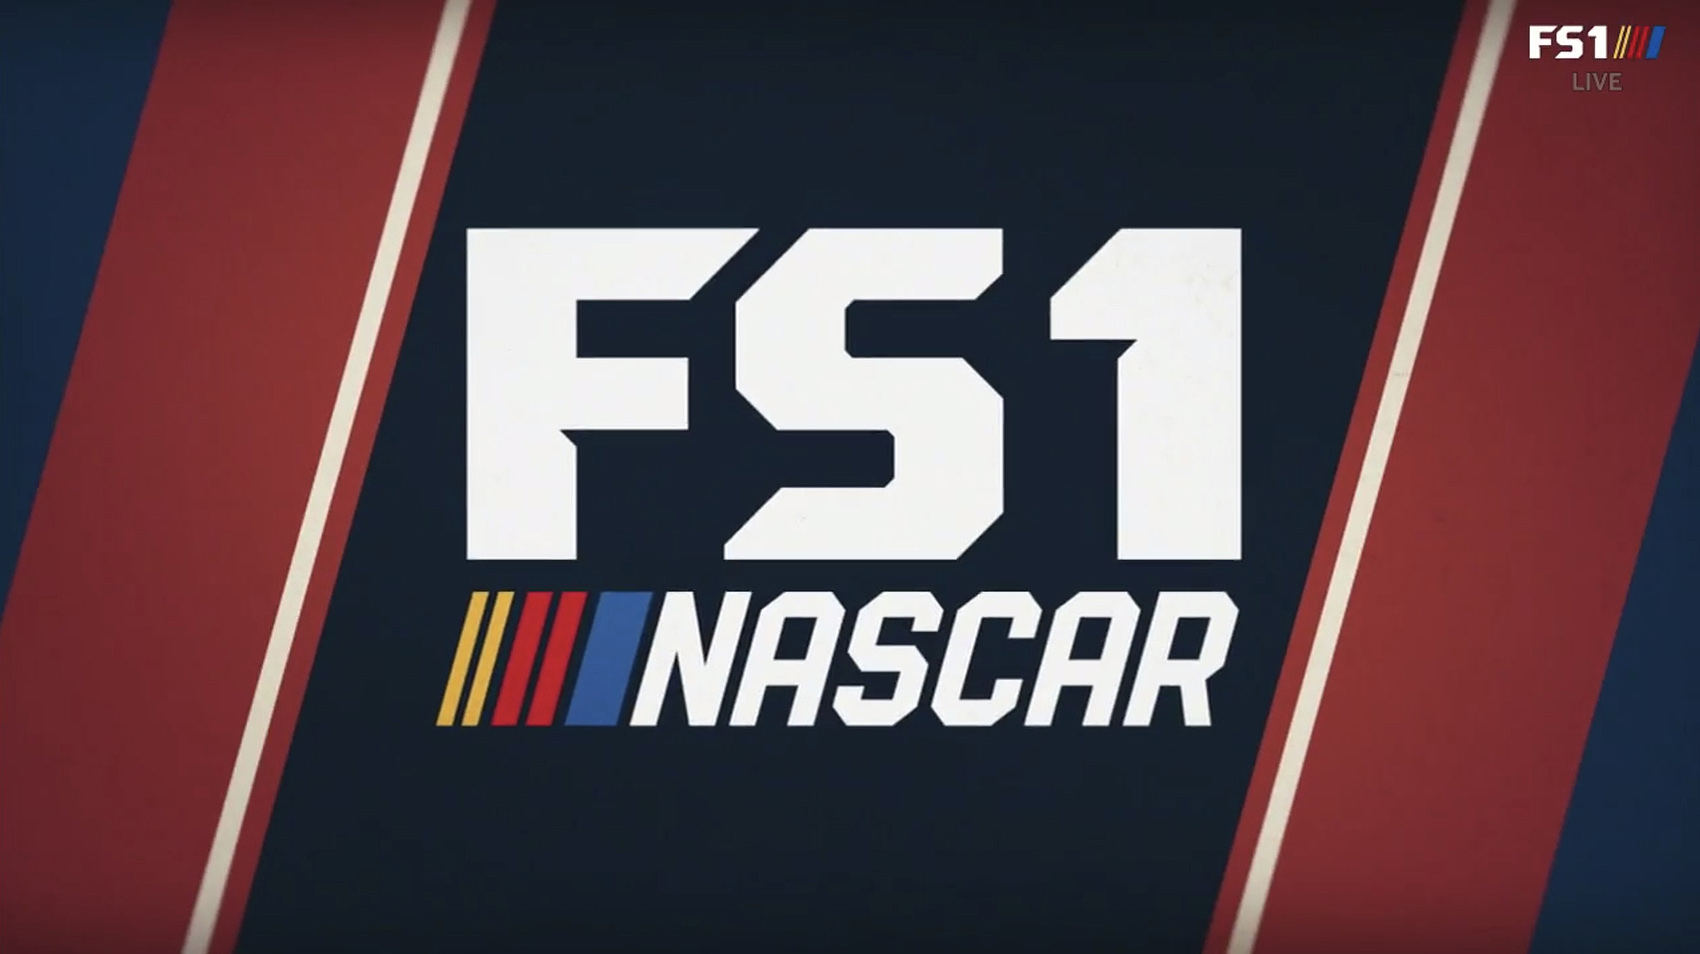 NCS_NASCAR-FOX-2019-BROADCAST-DESIGN_034